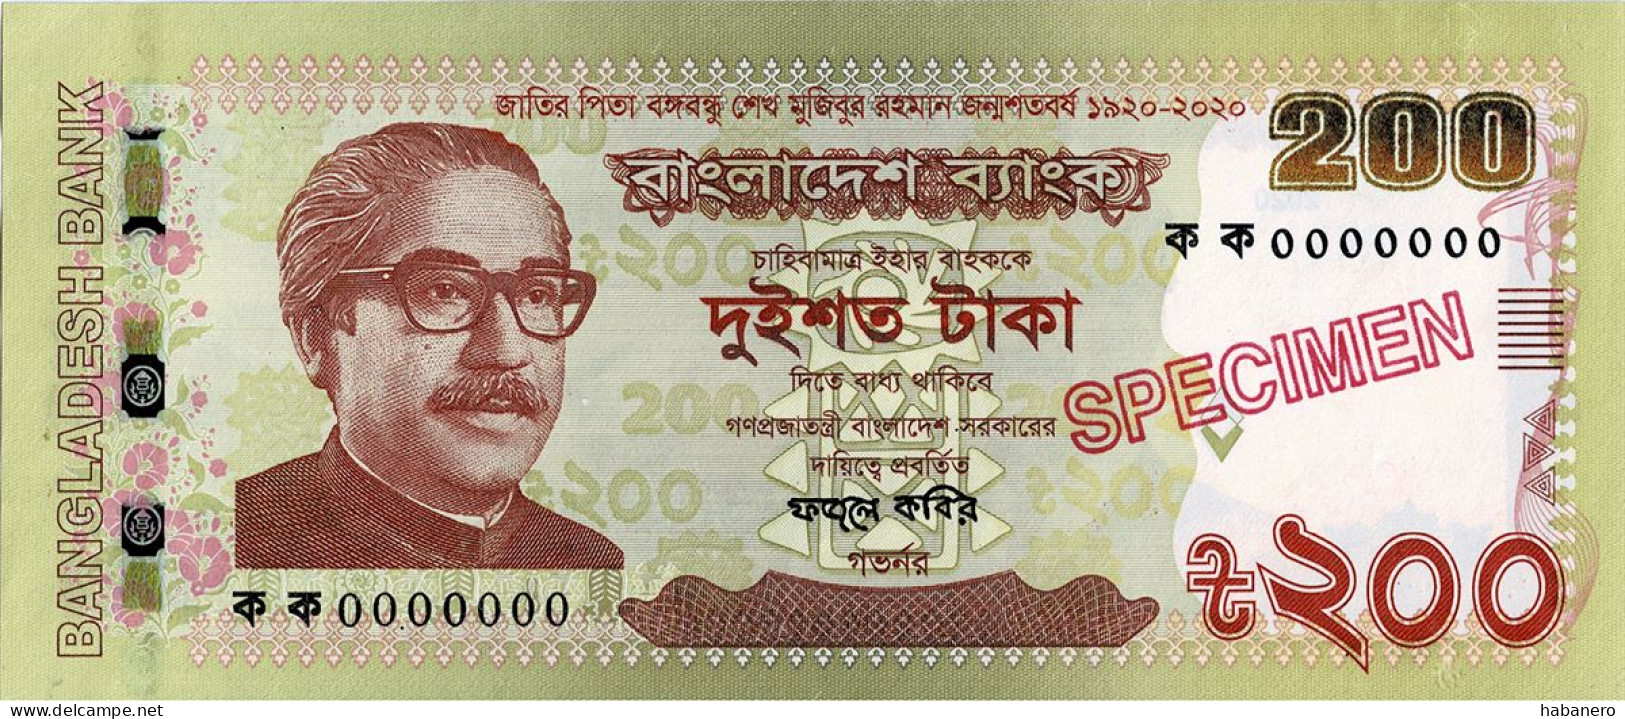 BANGLADESH 2020 P67as 200 TAKA SPECIMEN UNC BANKNOTE - Bangladesh